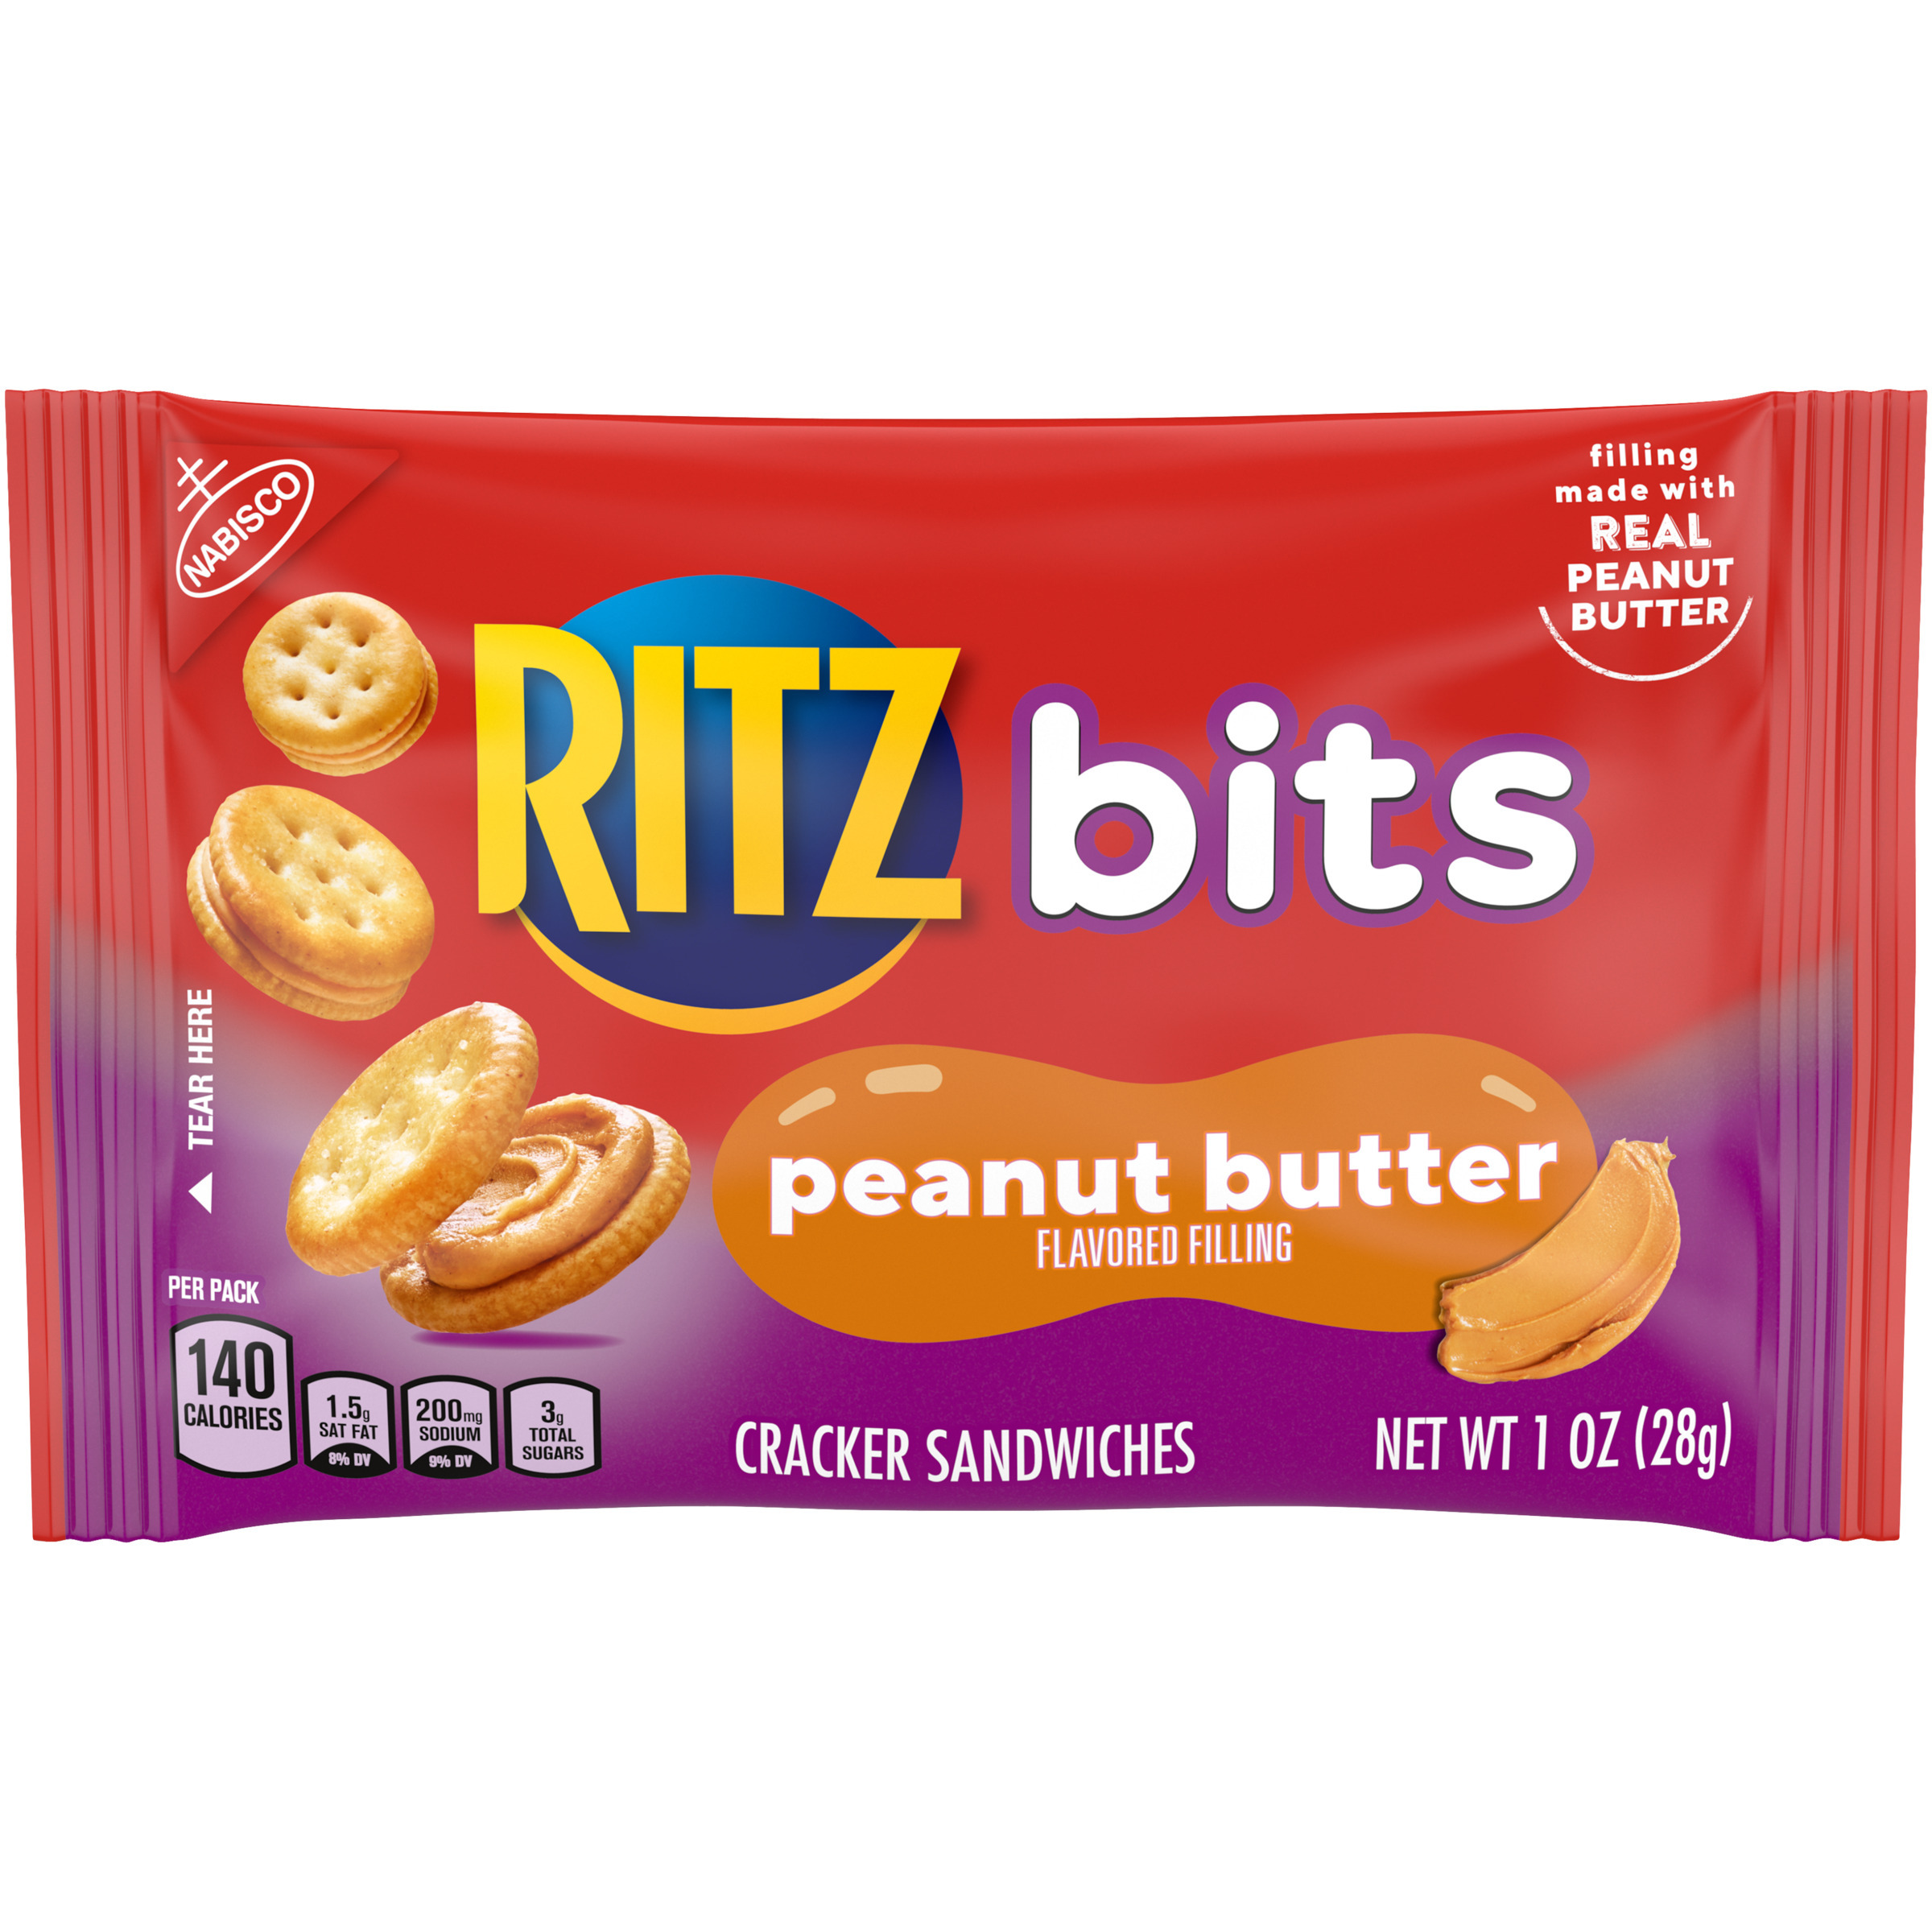 RITZ Bits Peanut Butter Cracker Sandwiches, 1 oz Snack Pack